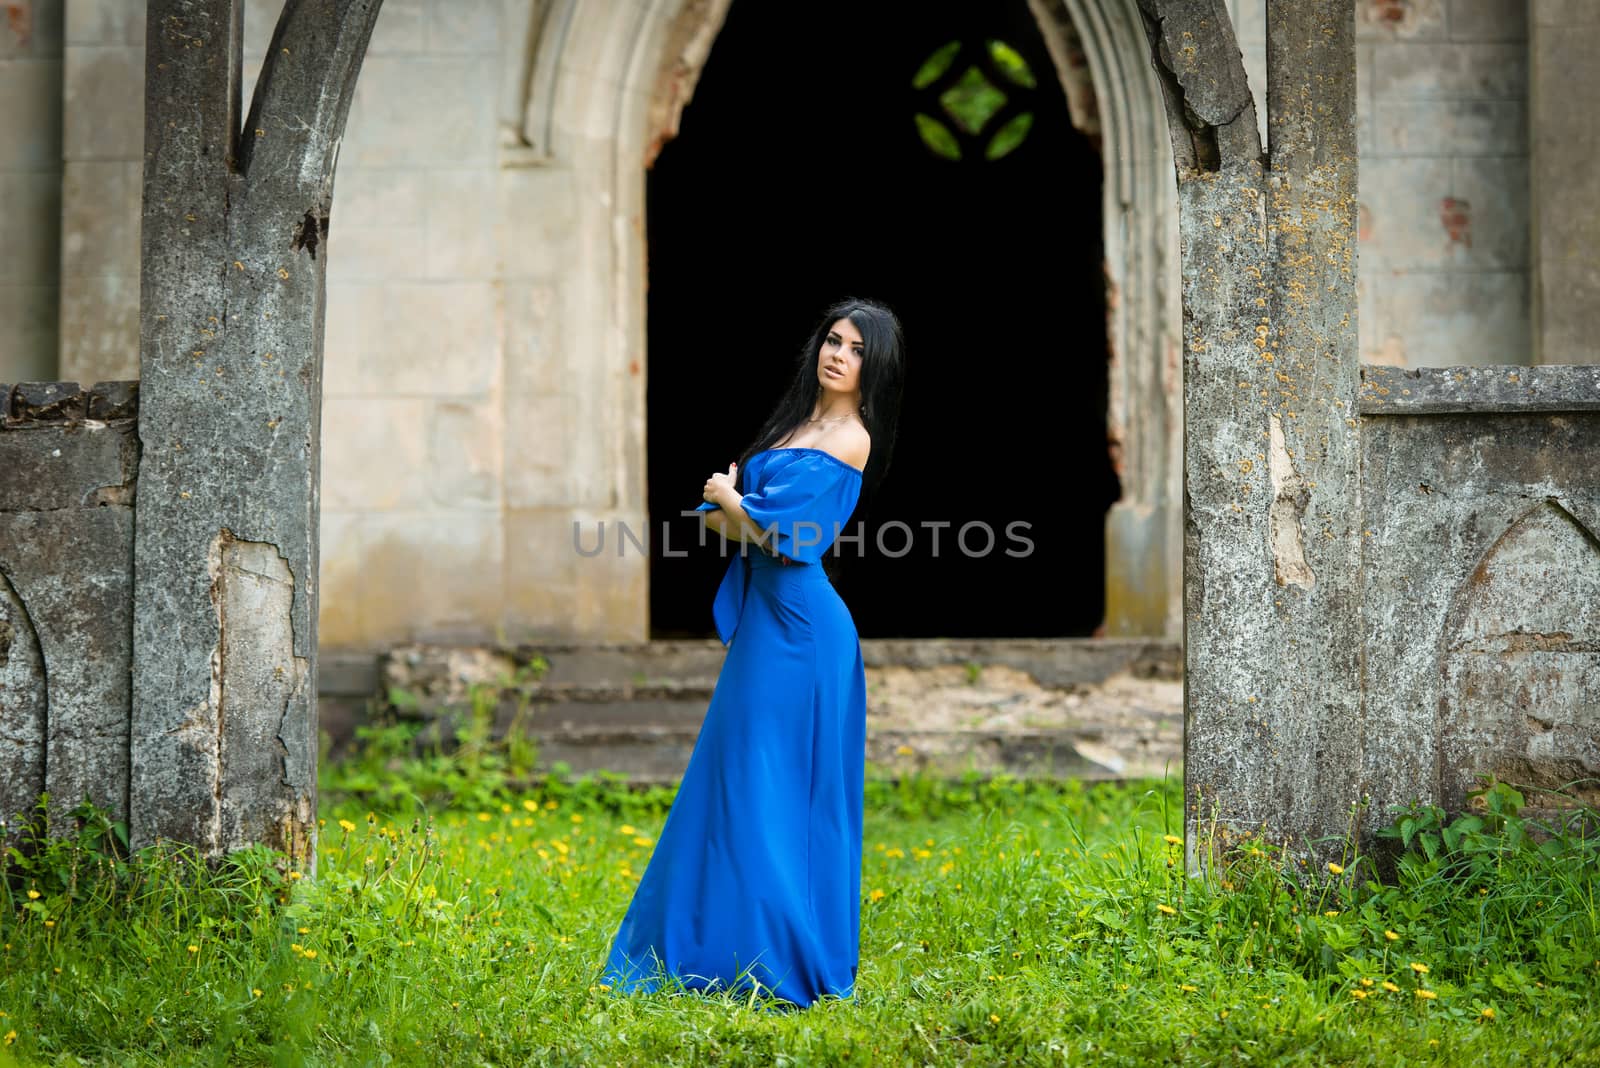 Portrait Of Sensual Fashion Woman In Blue Dress in church ruins by Draw05